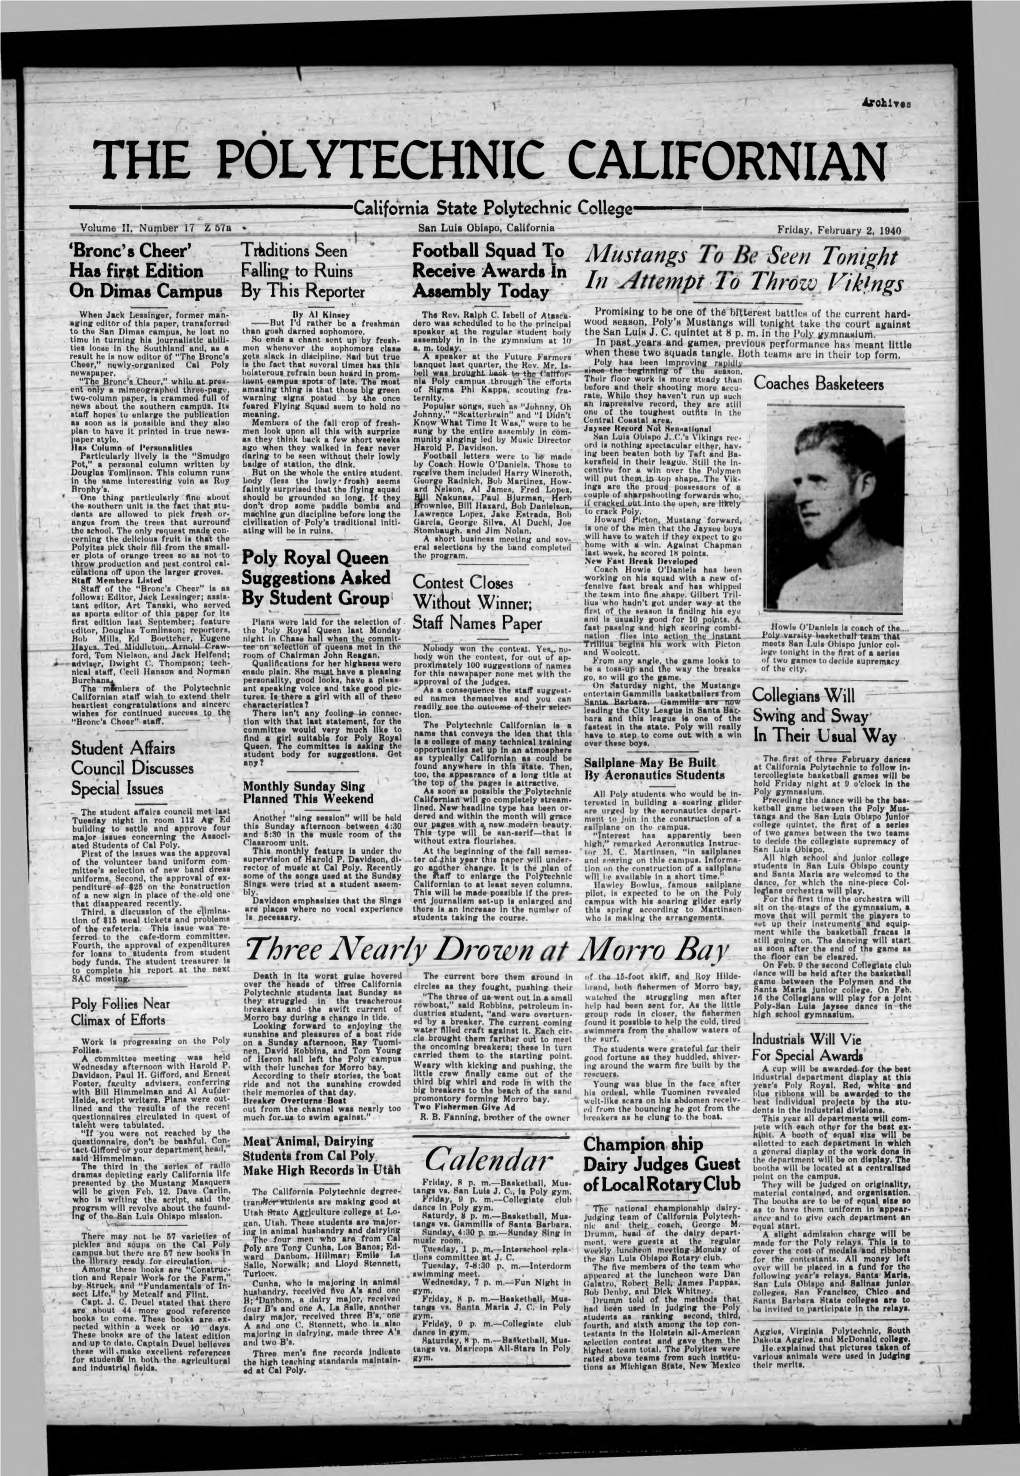 The Polytechnic Californian, February 2, 1940